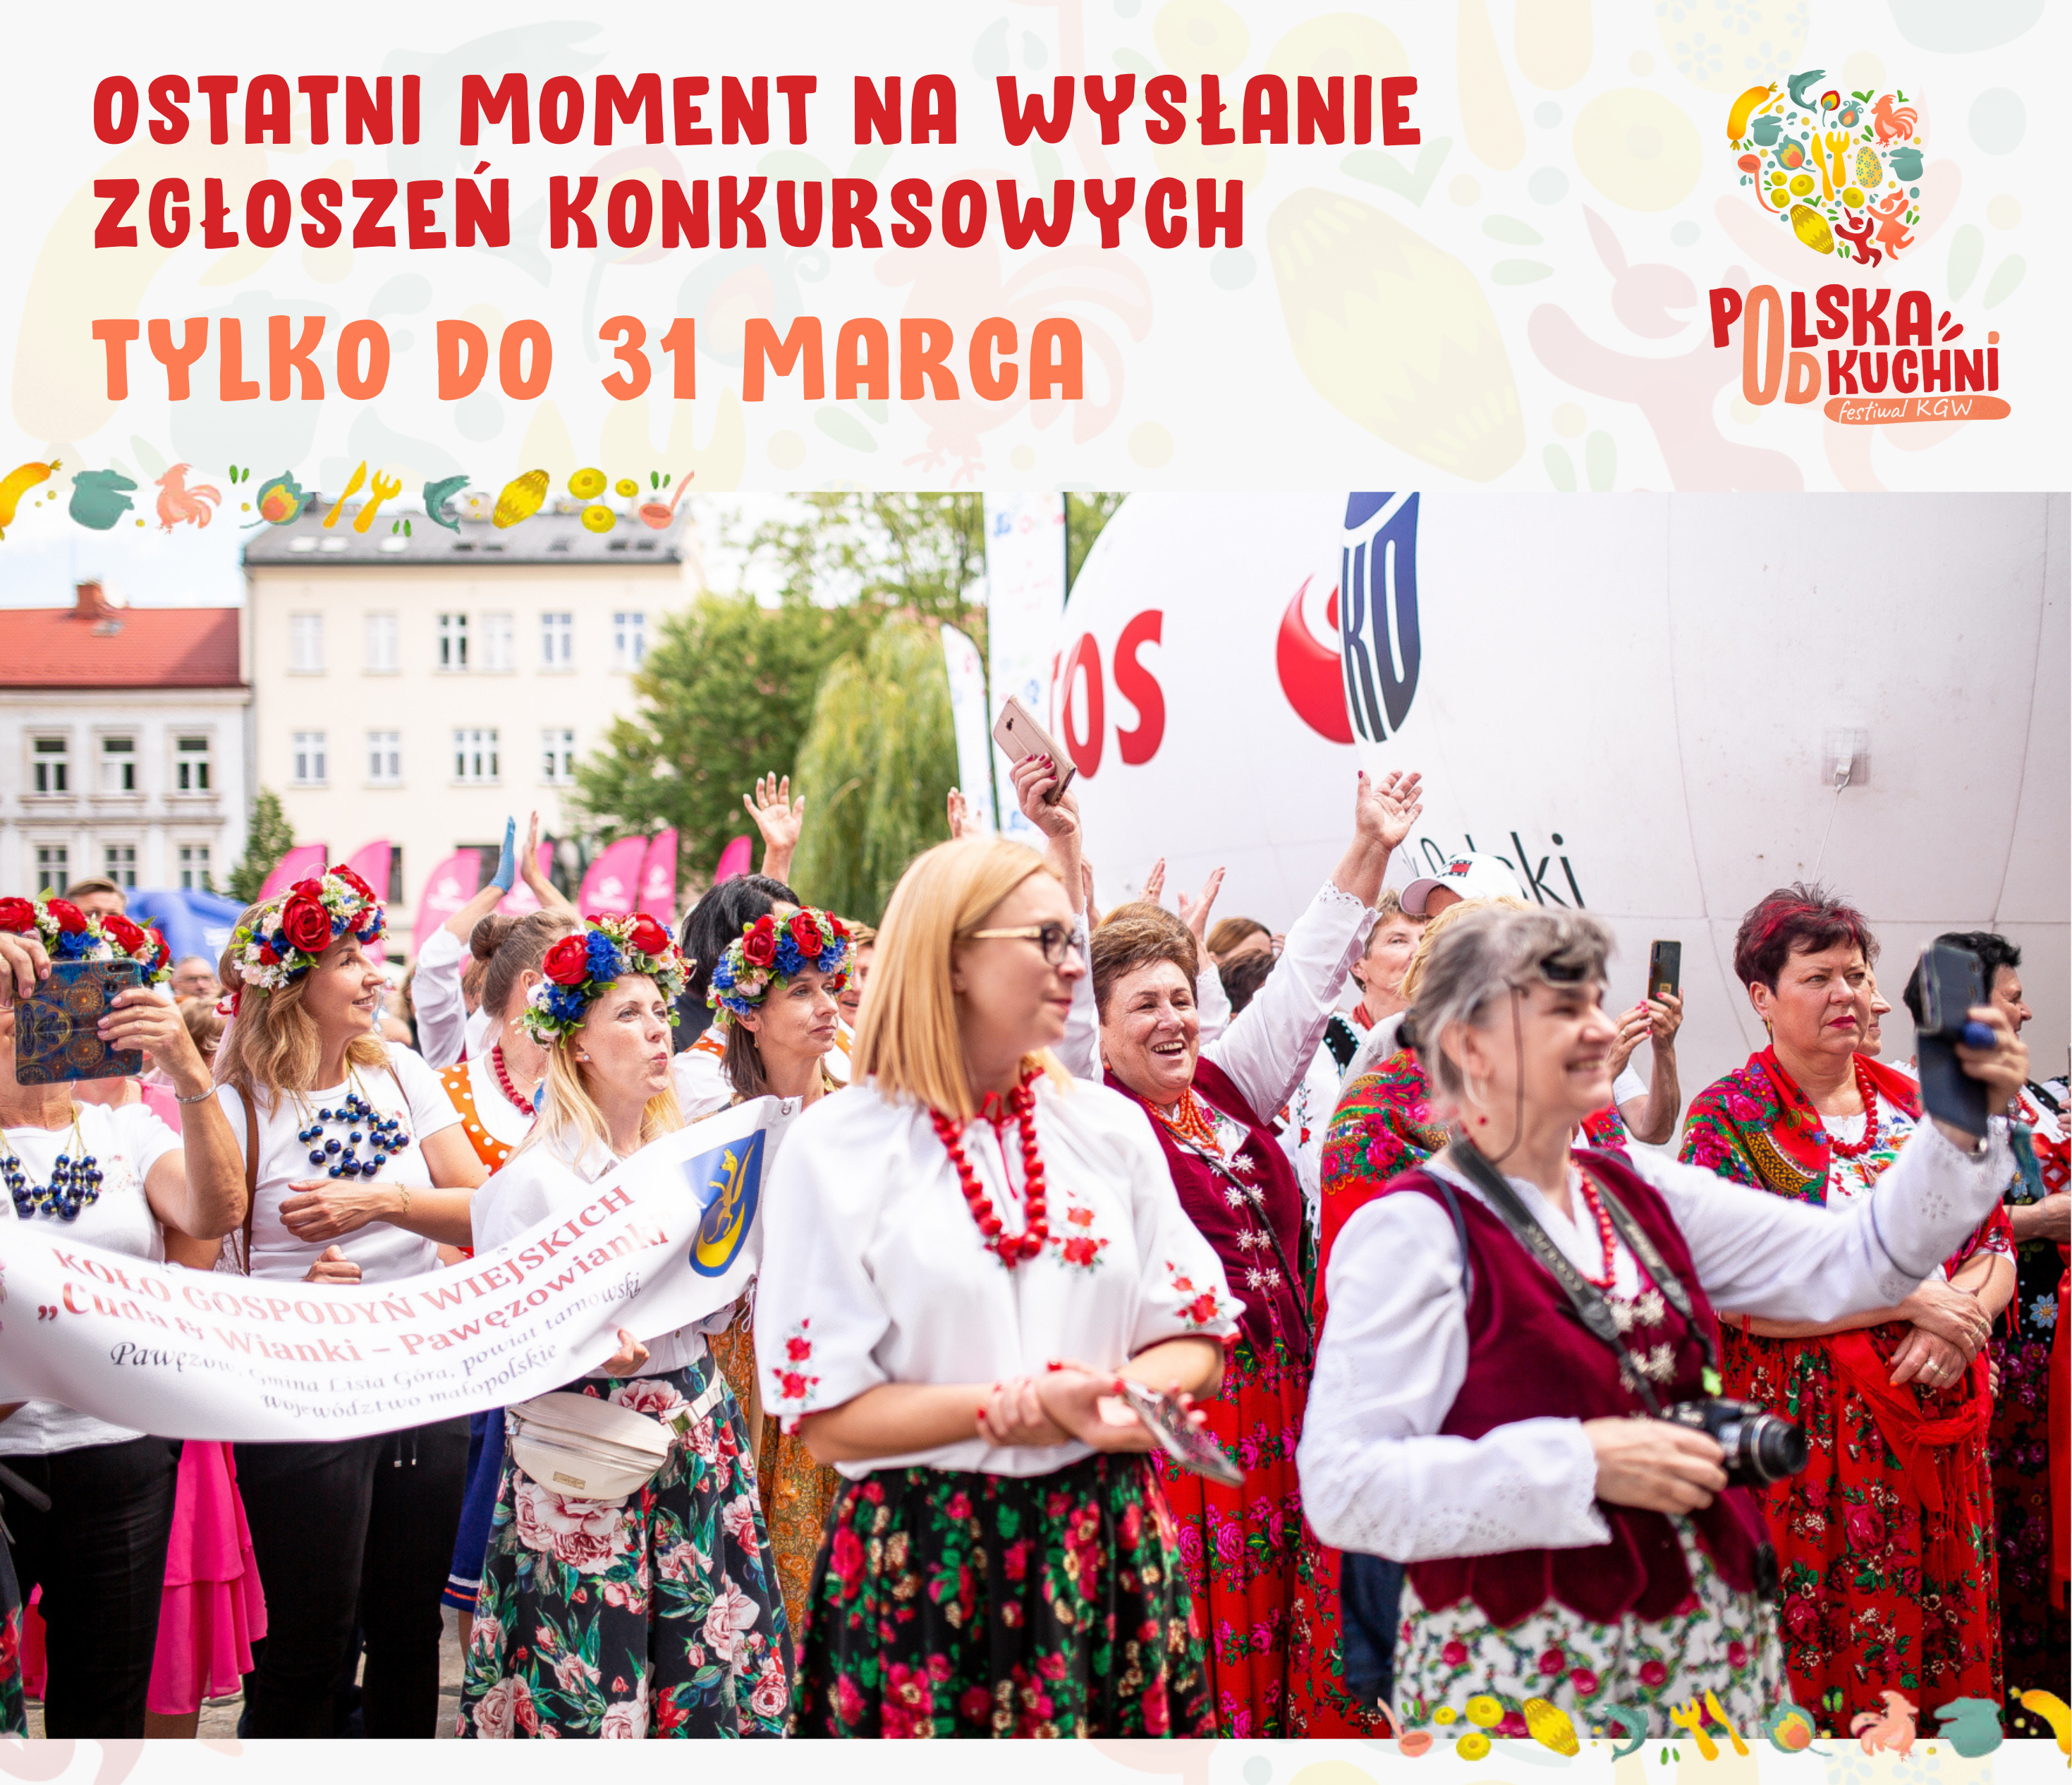 Festiwal Polska od Kuchni